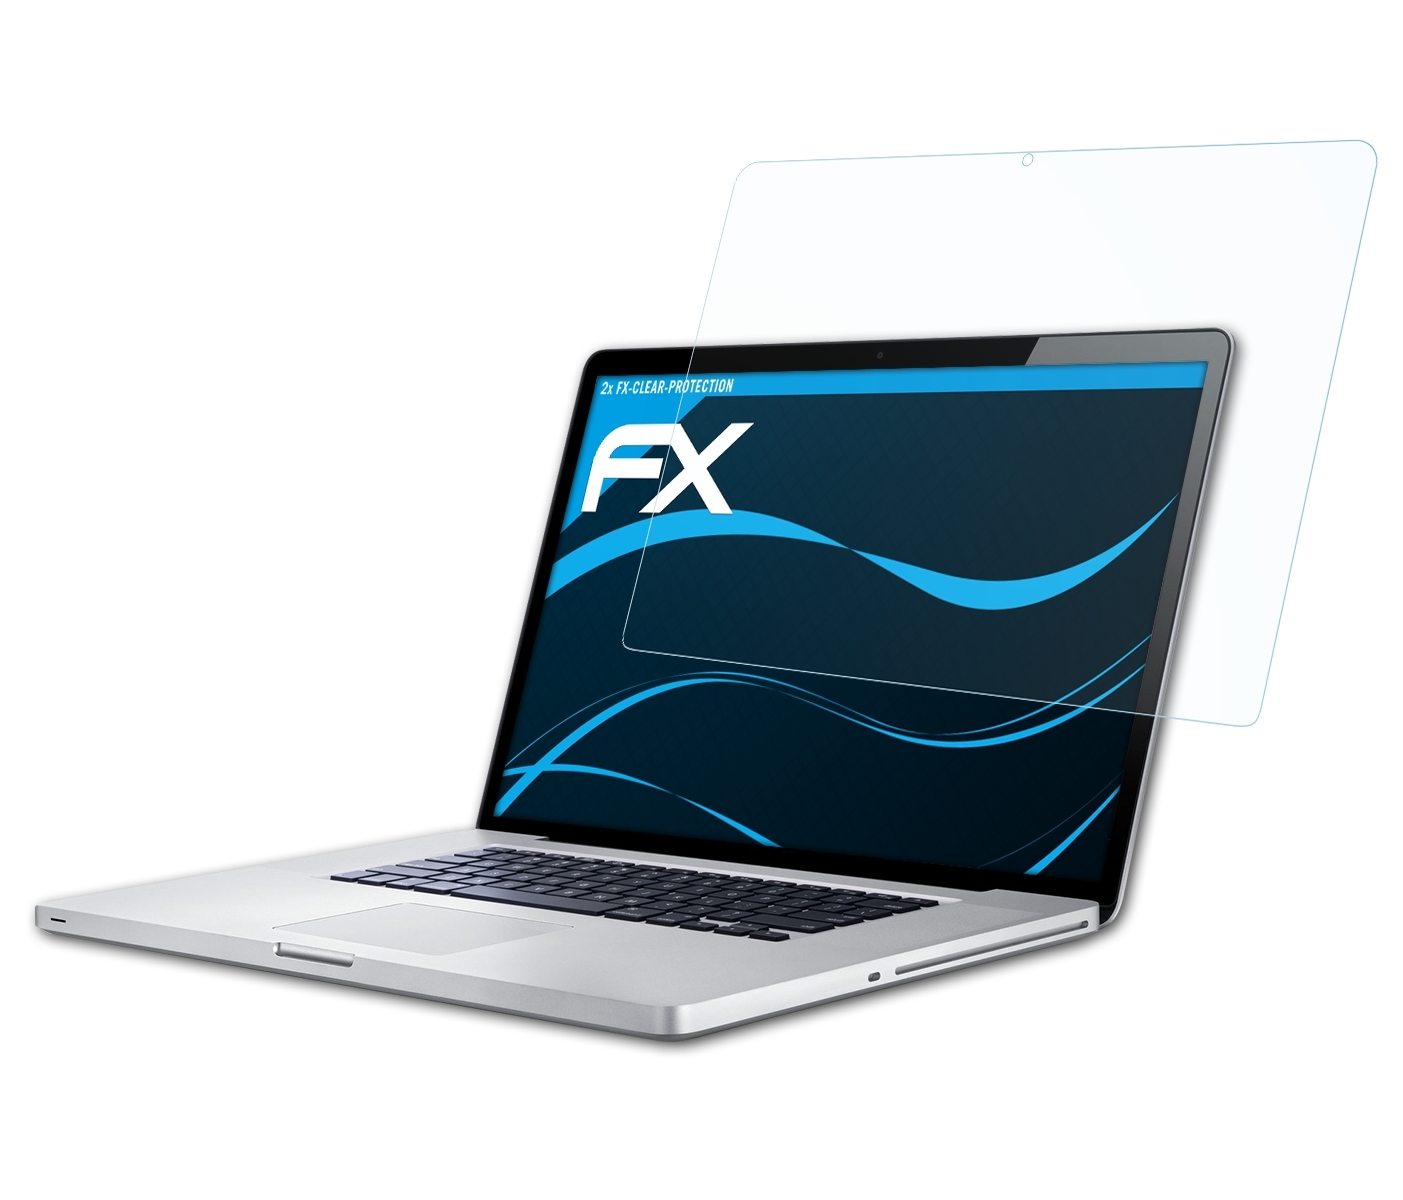 17 Displayschutz(für Pro 2x ATFOLIX WXGA) FX-Clear Apple MacBook